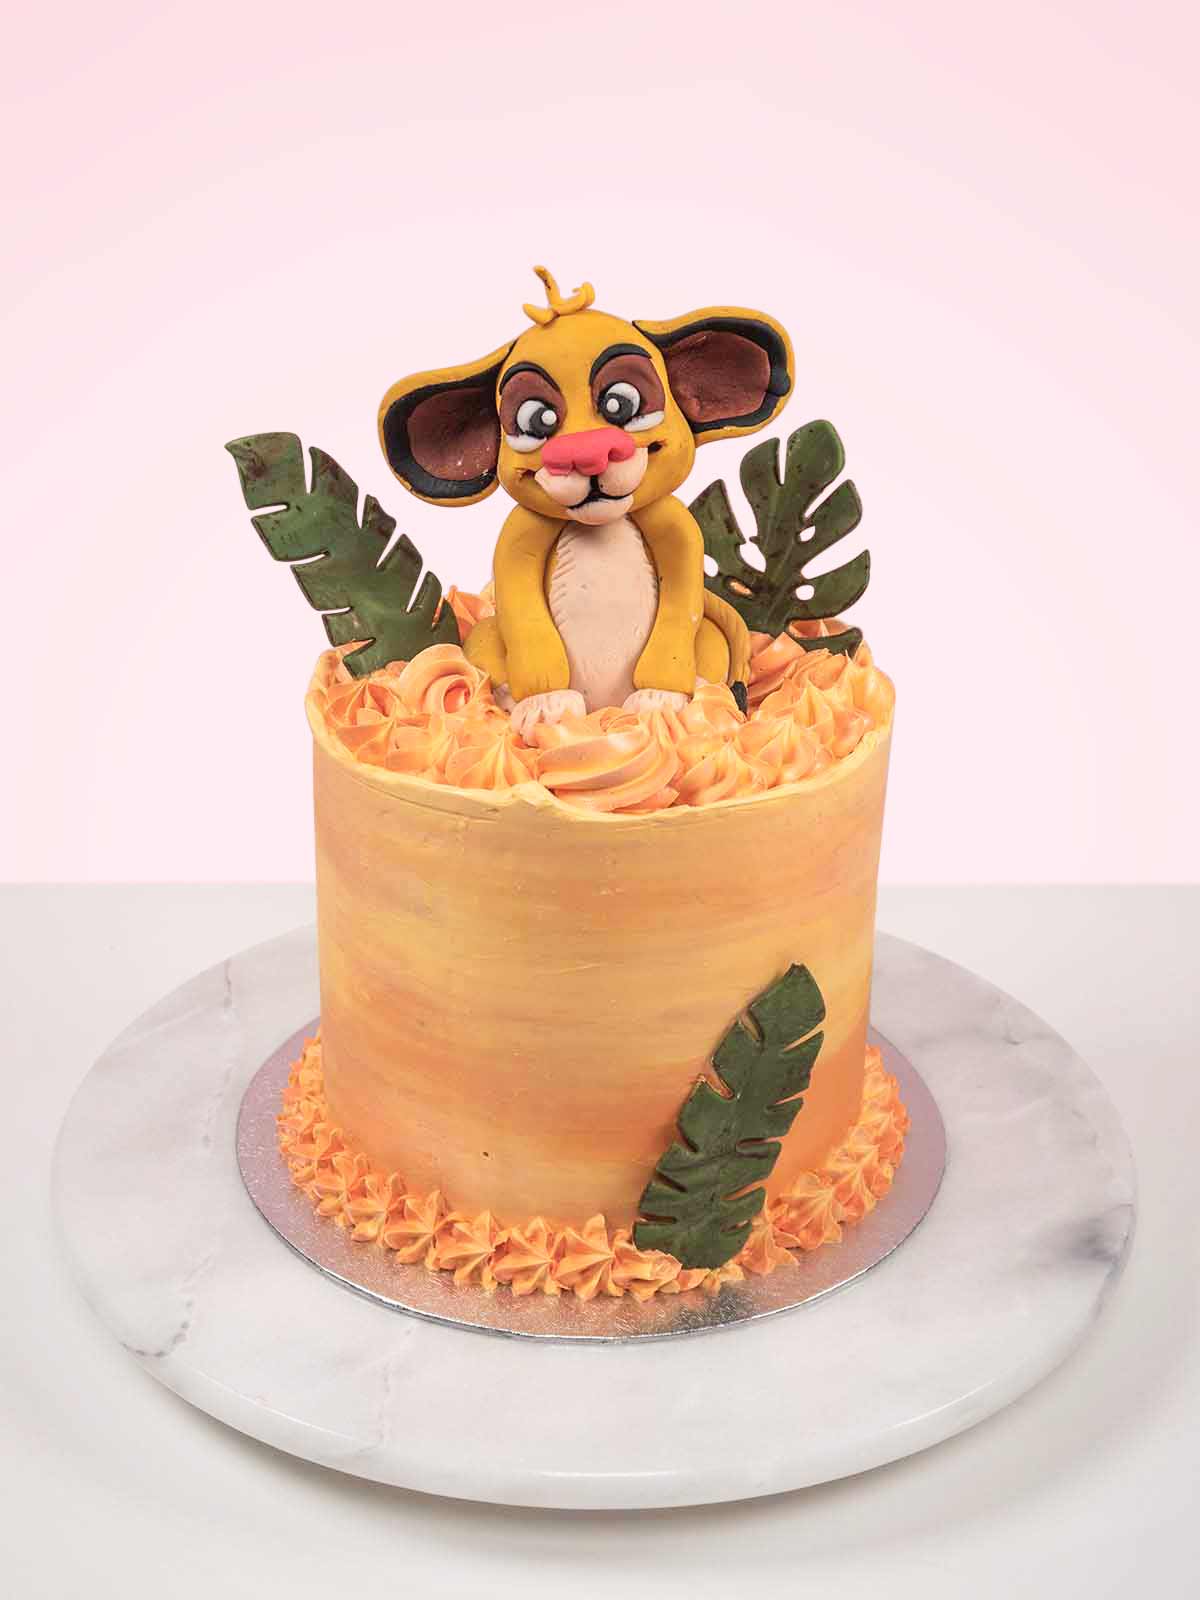 LION KING BIRTHDAY CAKE | THE CRVAERY CAKES